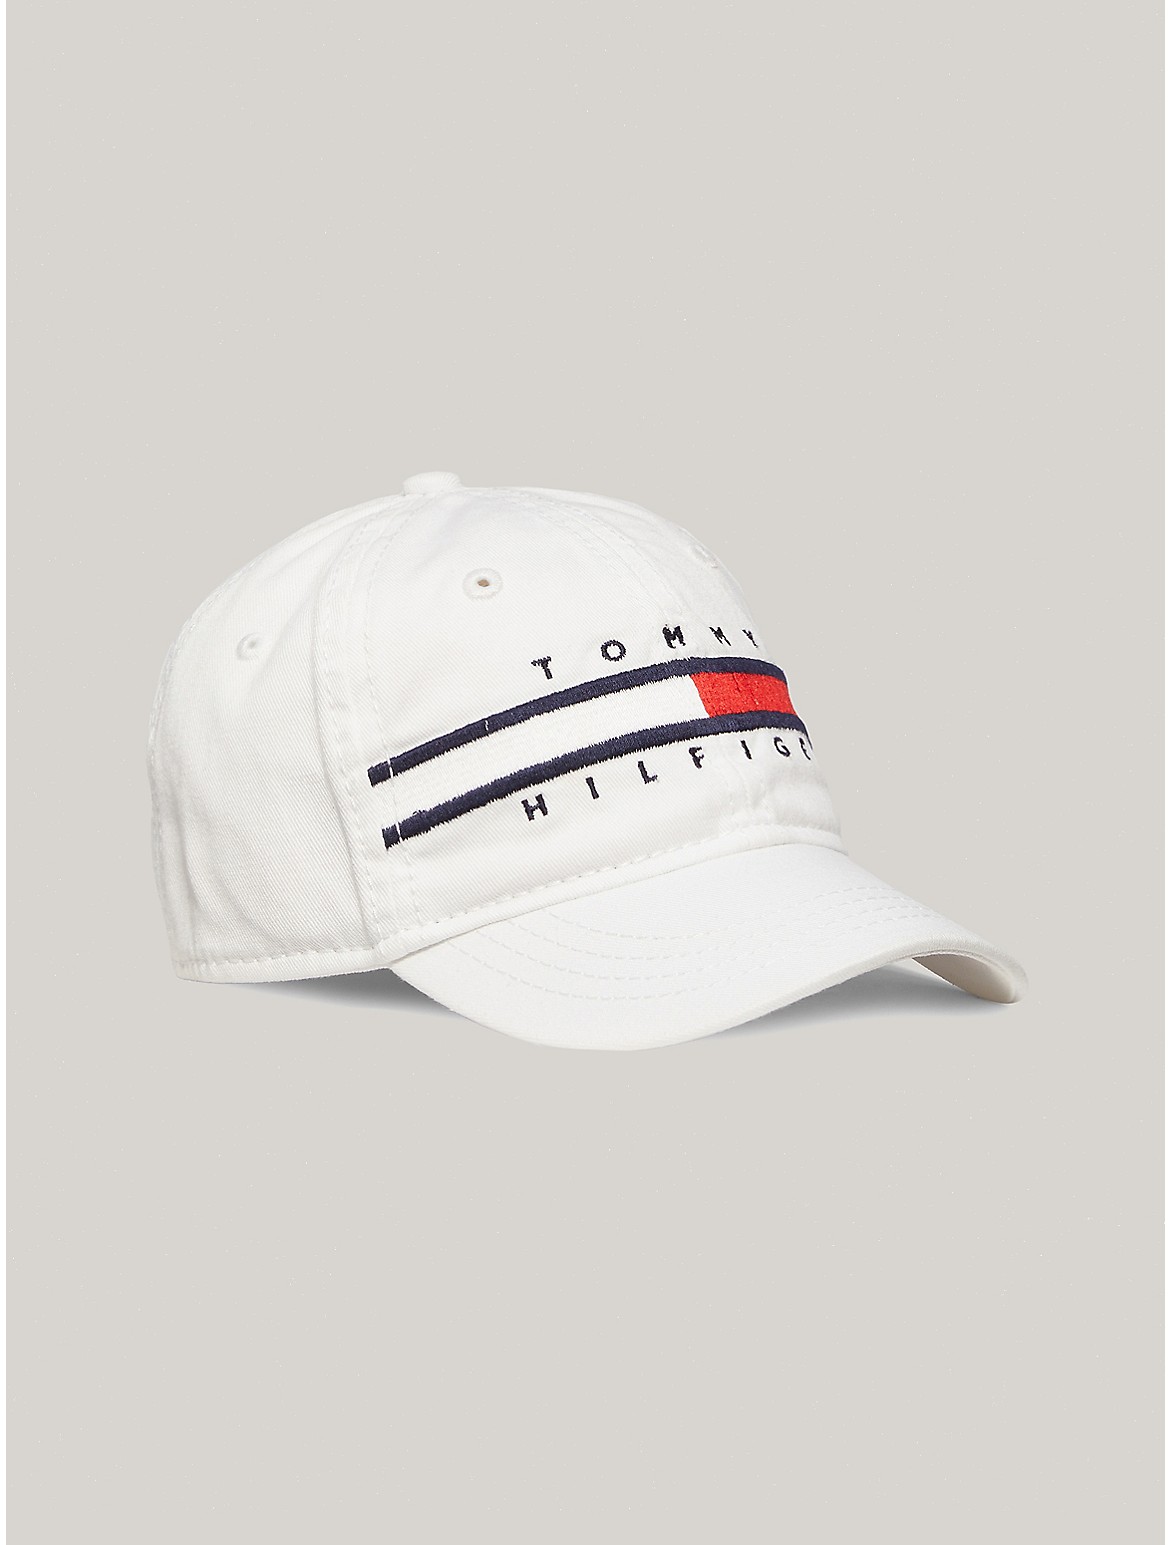 Tommy Hilfiger Kids' Flag Stripe Logo Baseball Cap - White - L